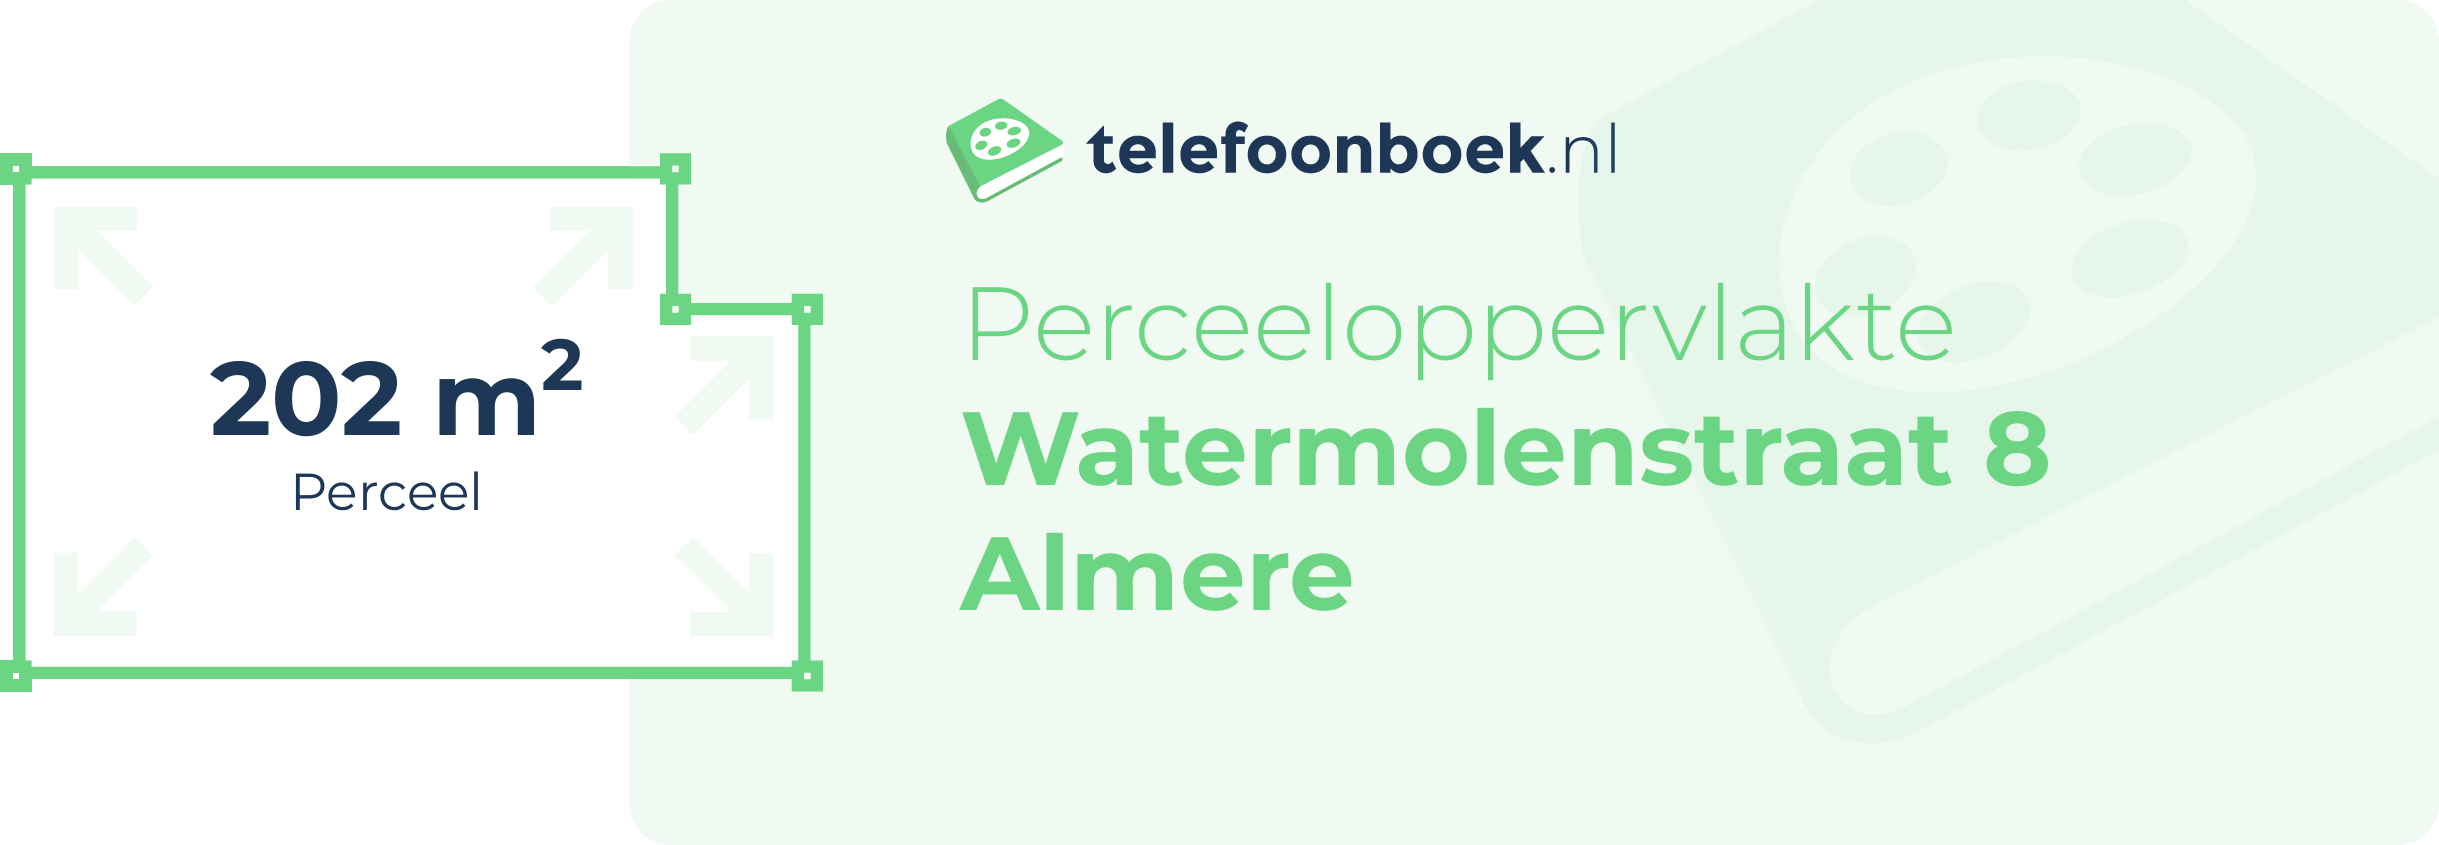 Perceeloppervlakte Watermolenstraat 8 Almere